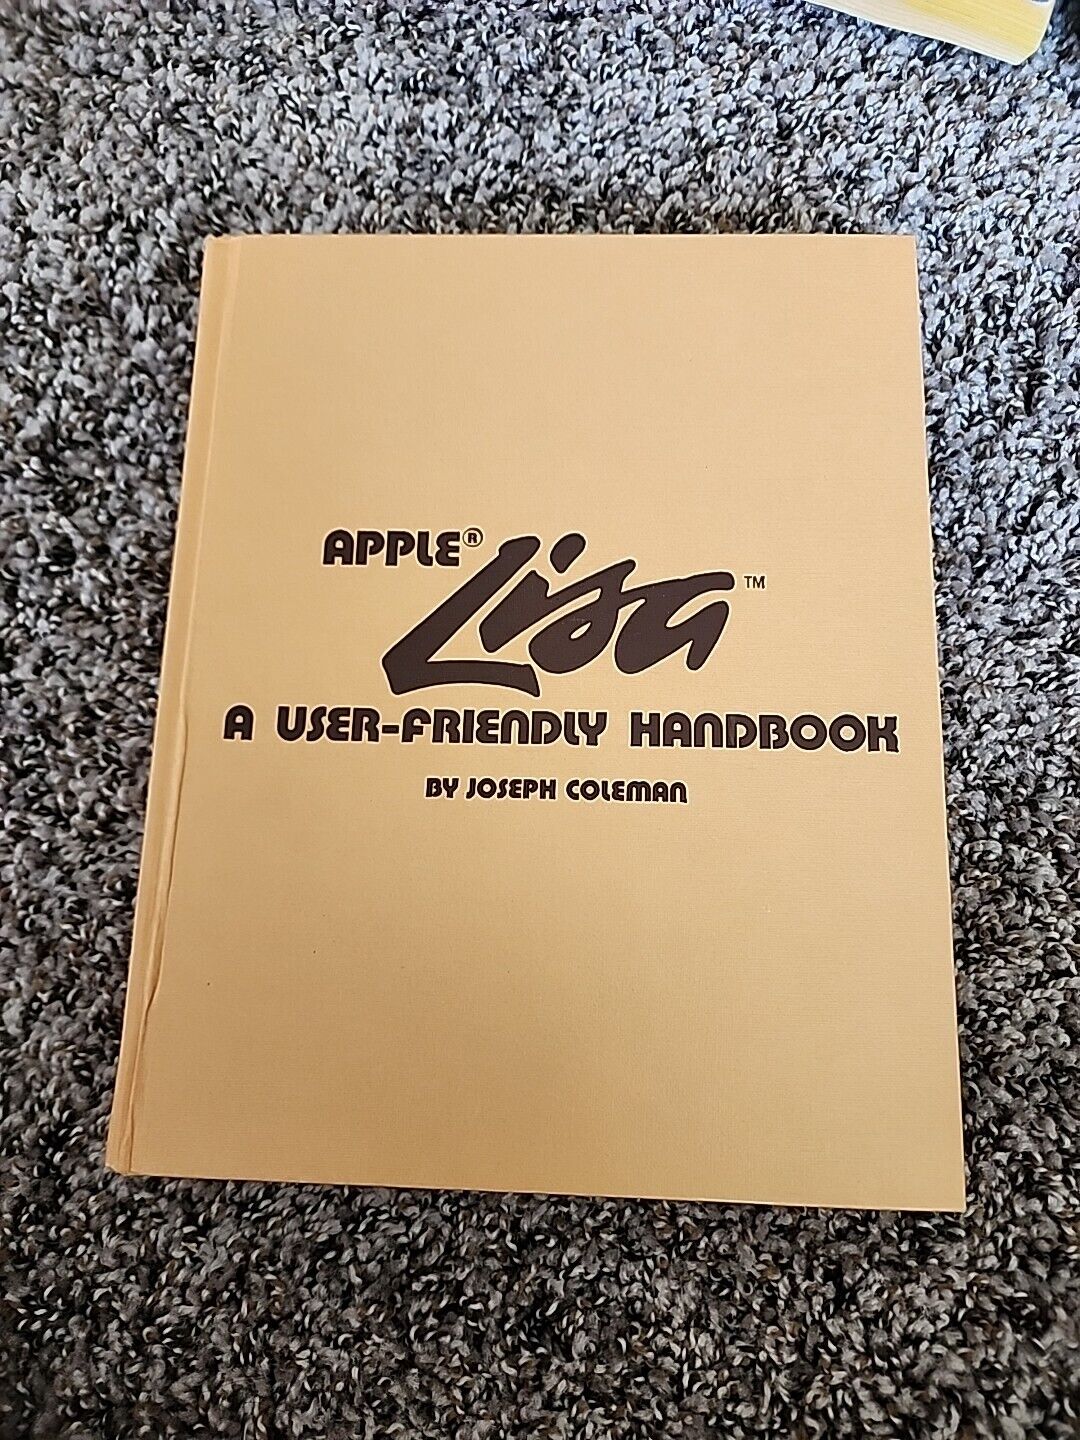  Rare Vintage APPLE LISA USER friendly Handbook hardcover Book/ Joseph Coleman